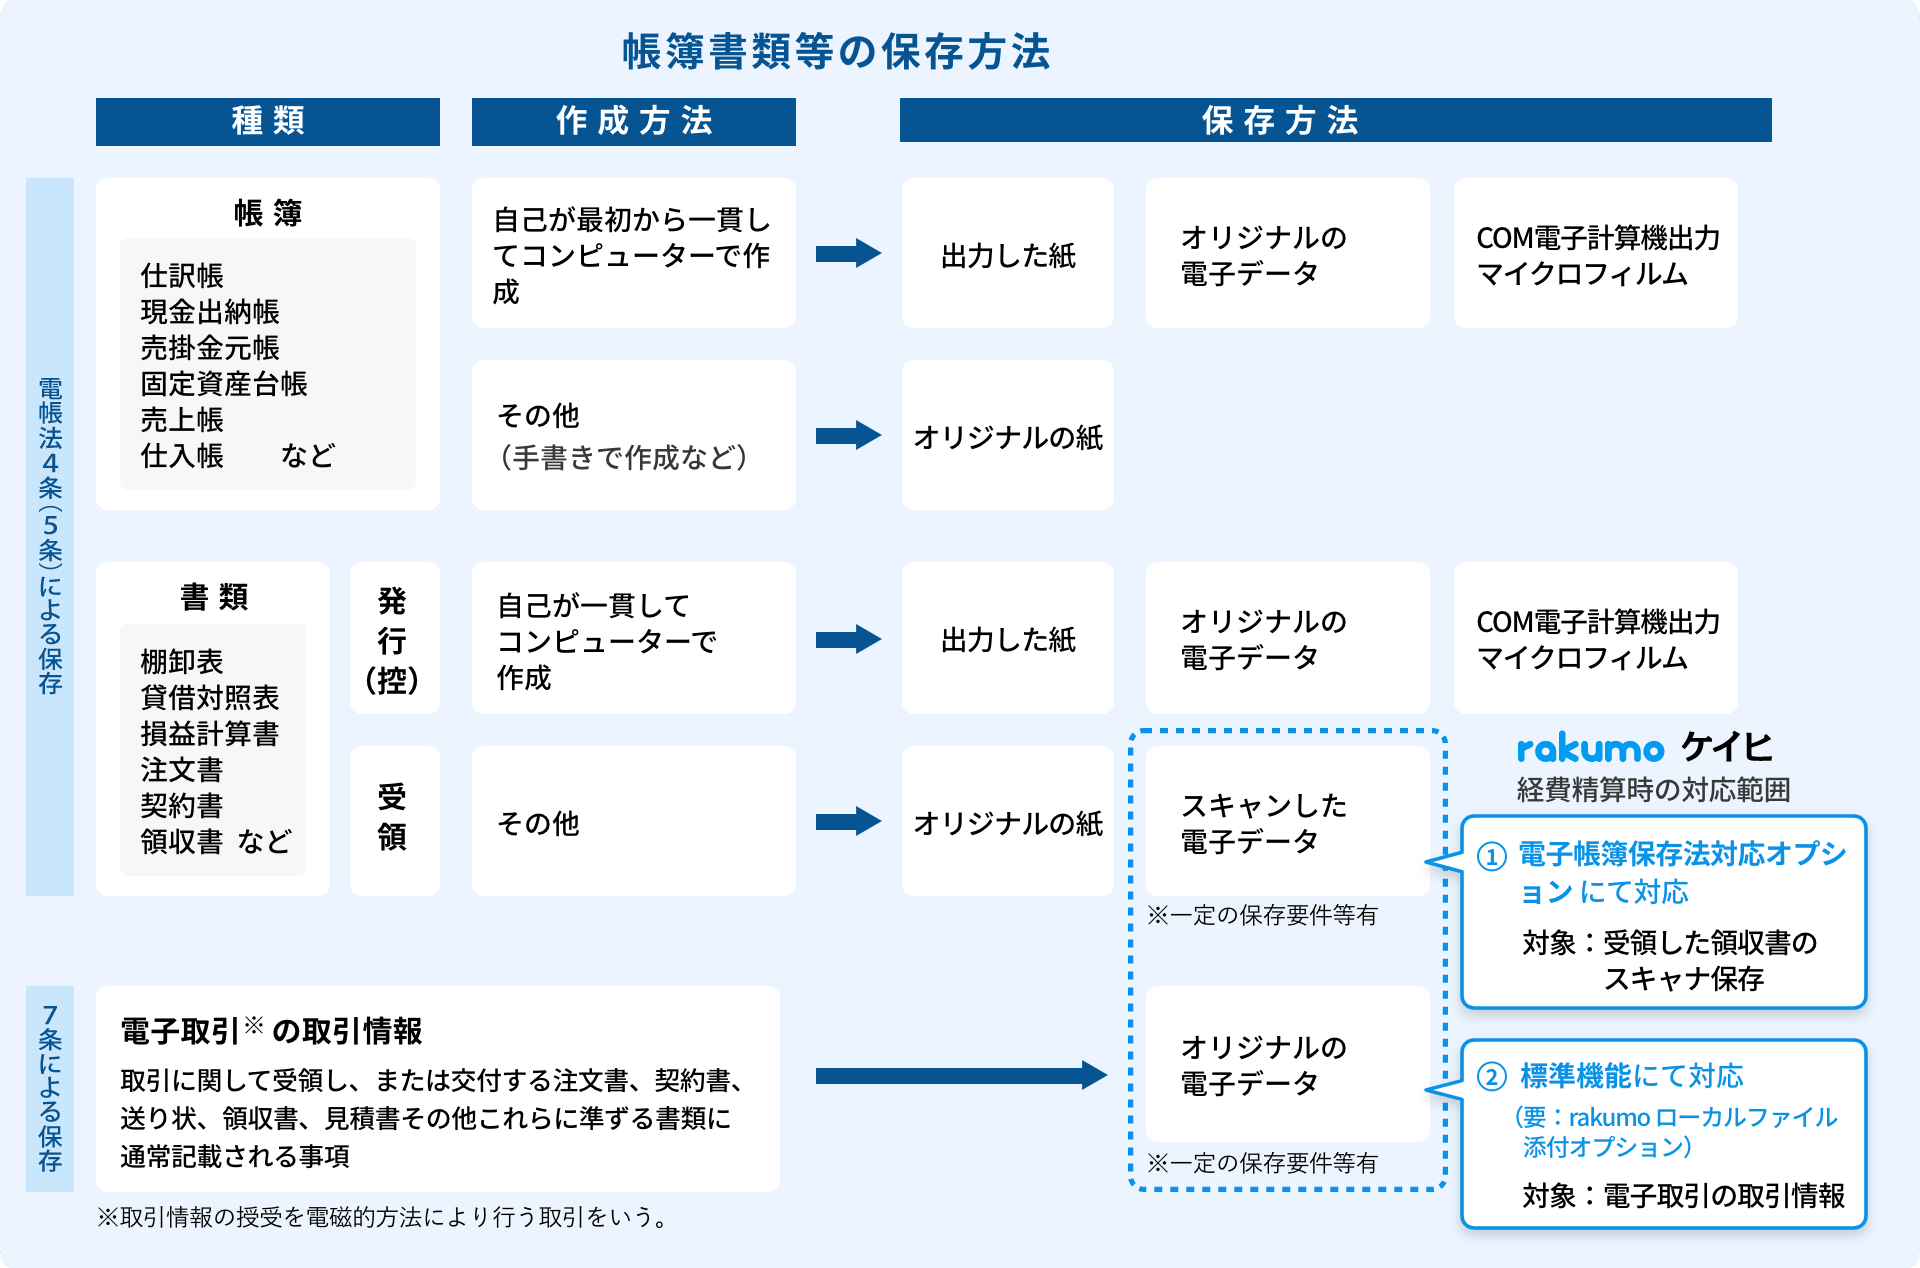 rakumo ケイヒ rakumo ケイヒで対象となる書類と保存方法について